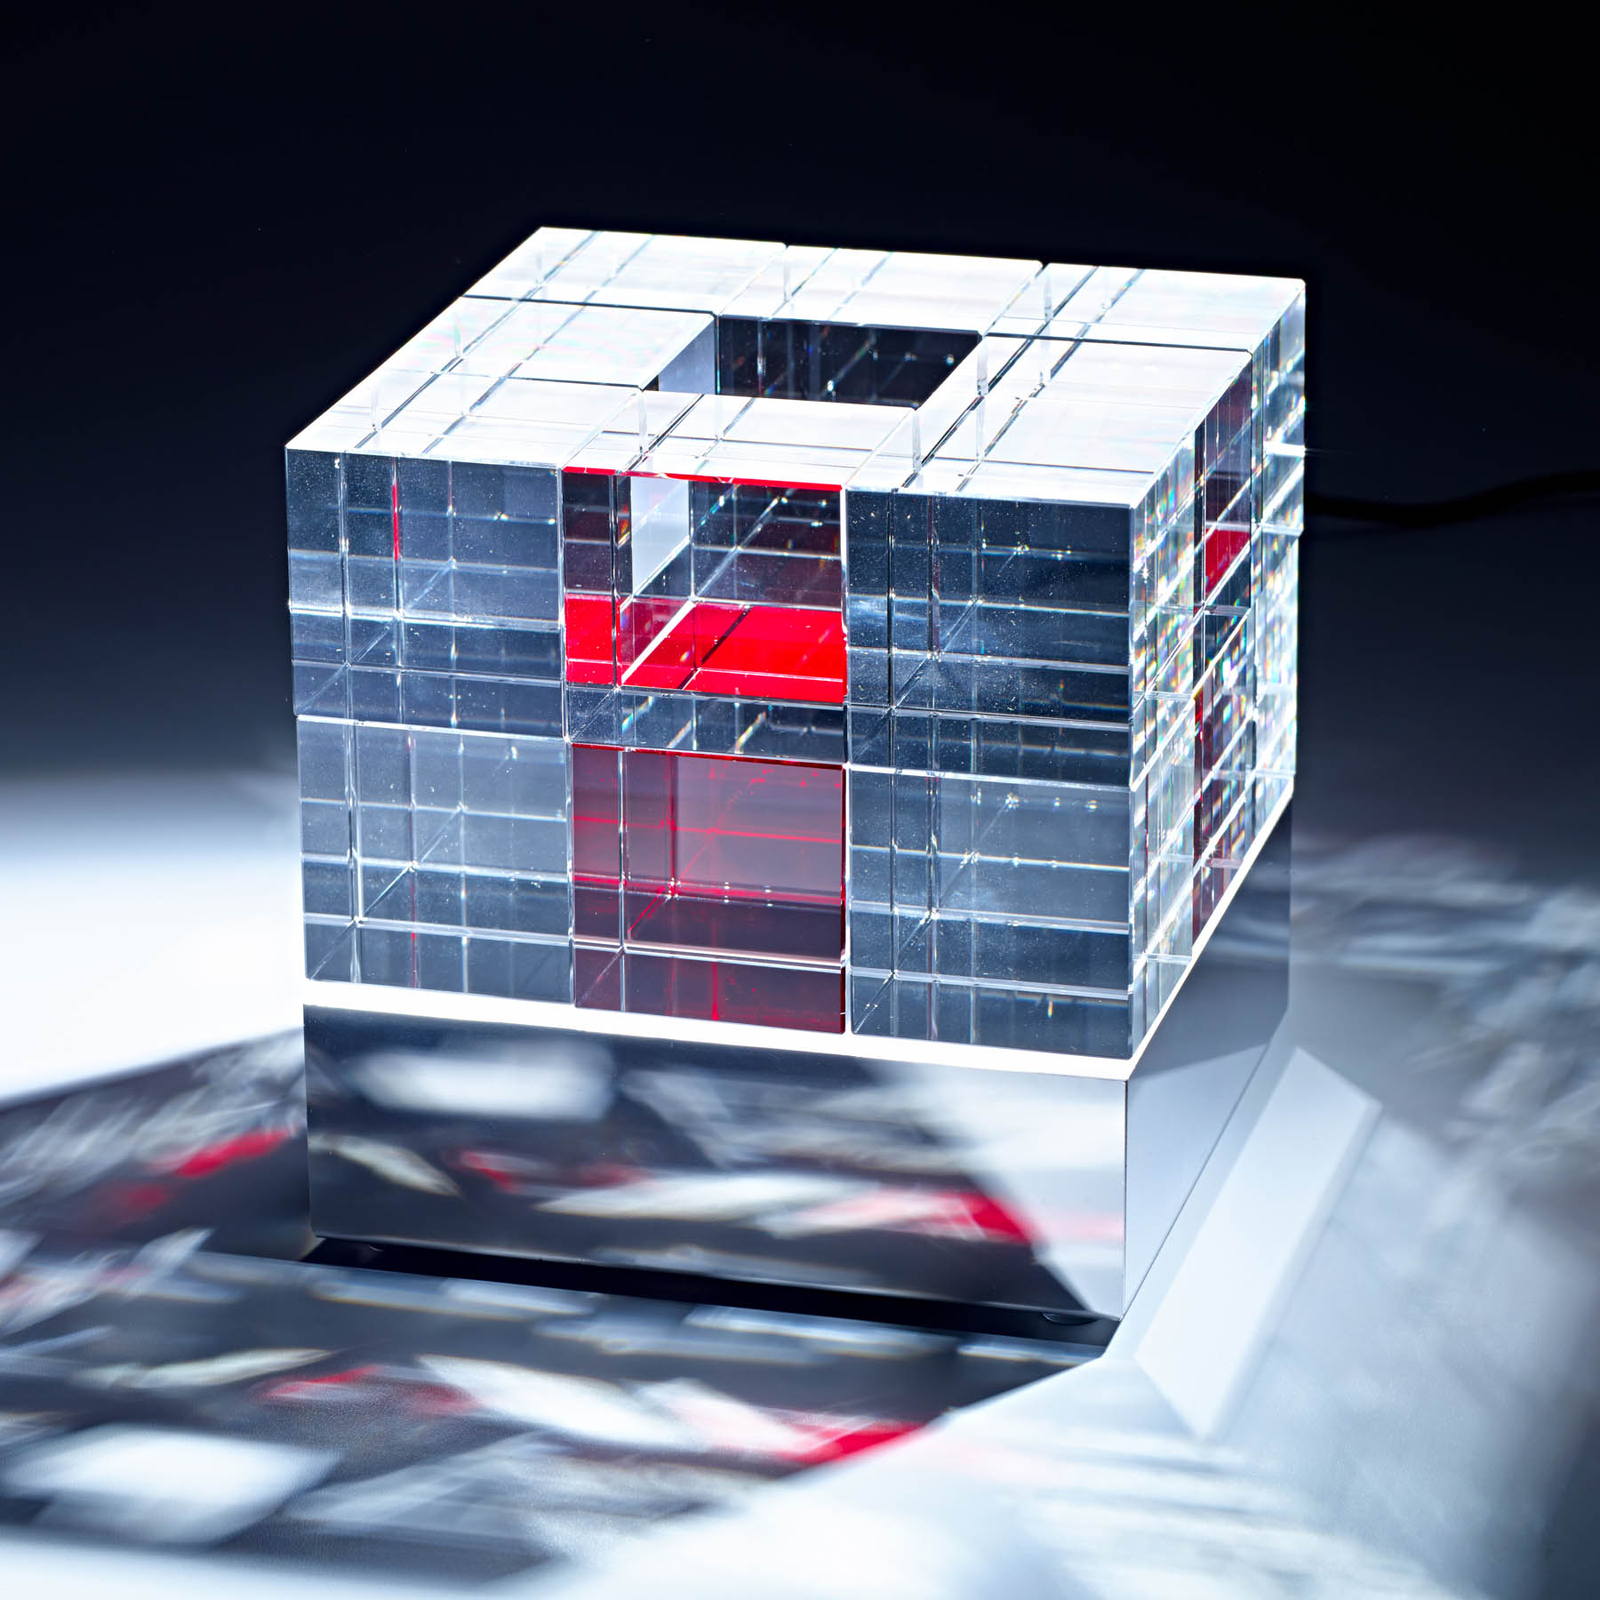 TECNOLUMEN Cubelight Move bordslampa, färgglad